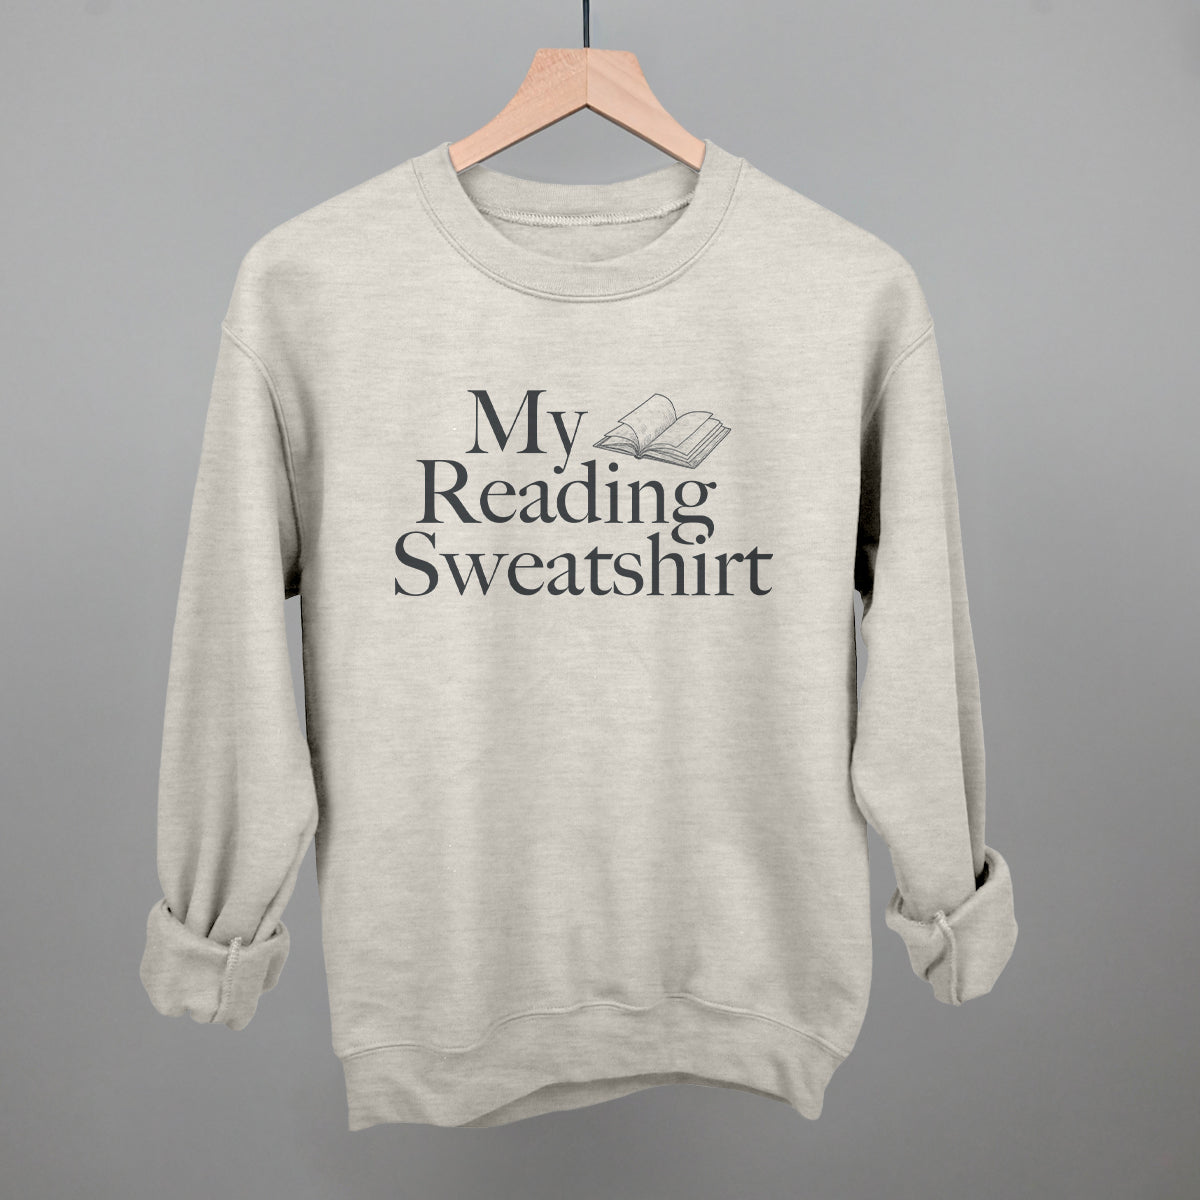 My Reading Sweatshirt